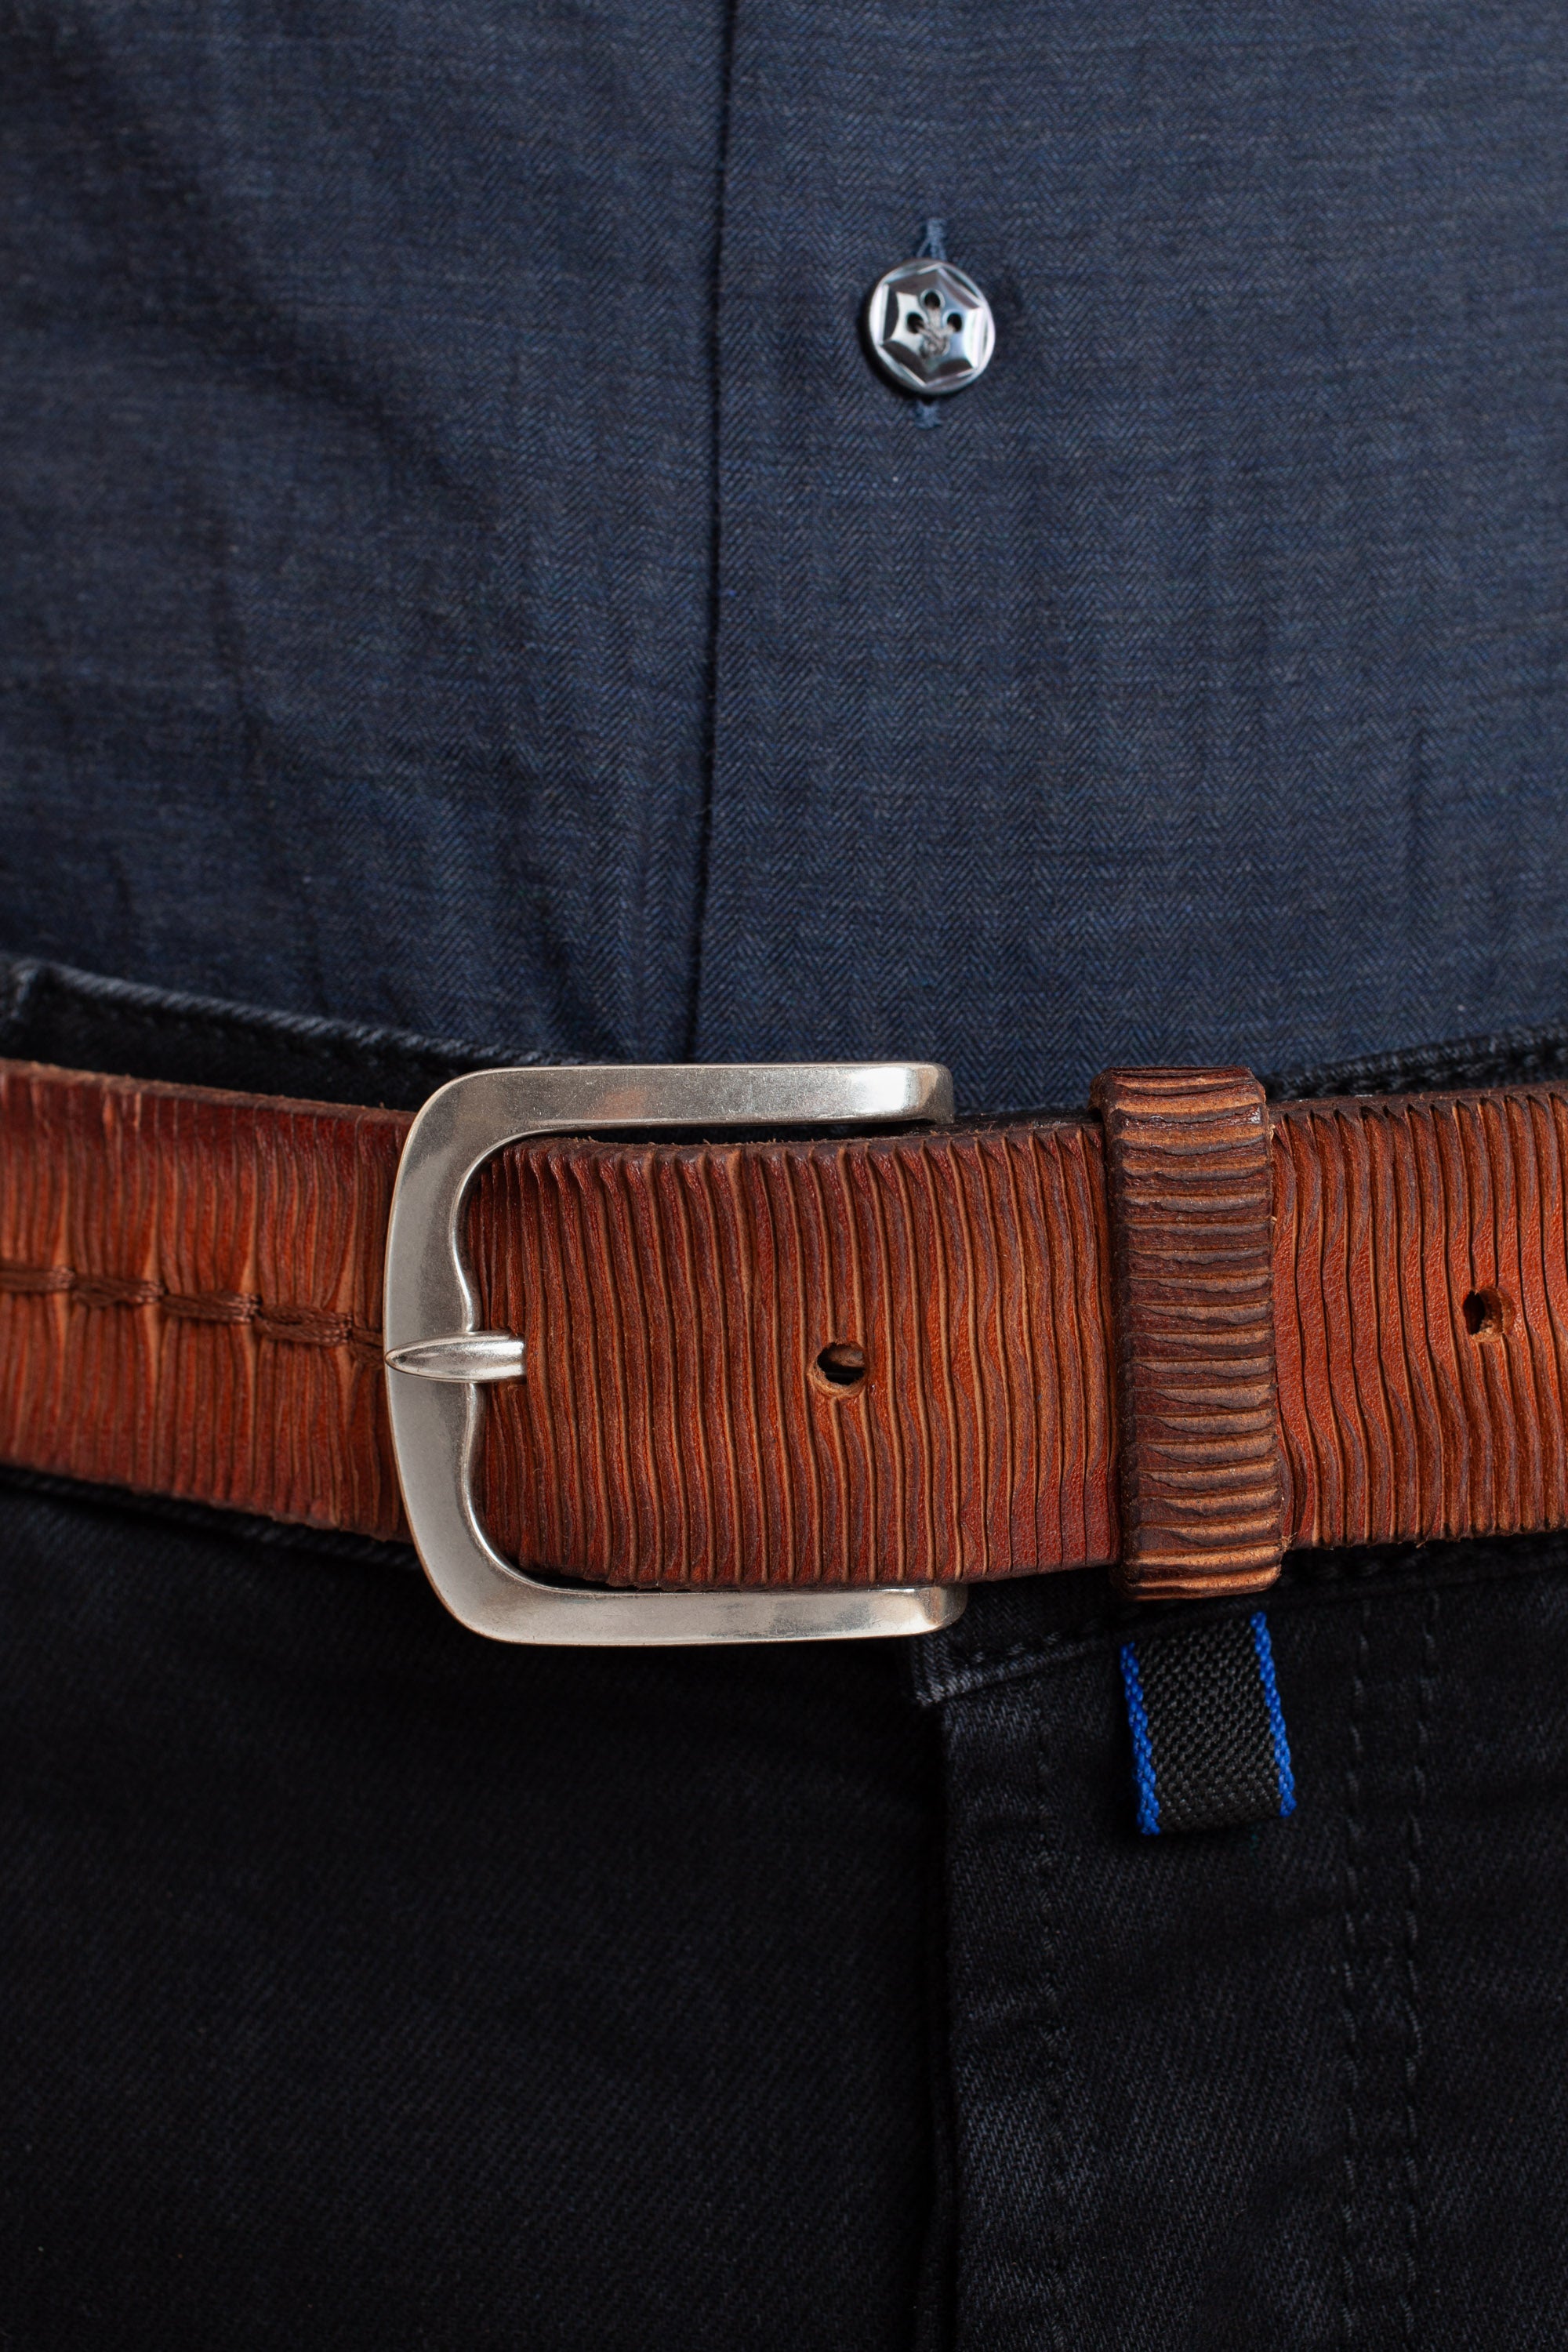 Lamellar leather belt with stitching